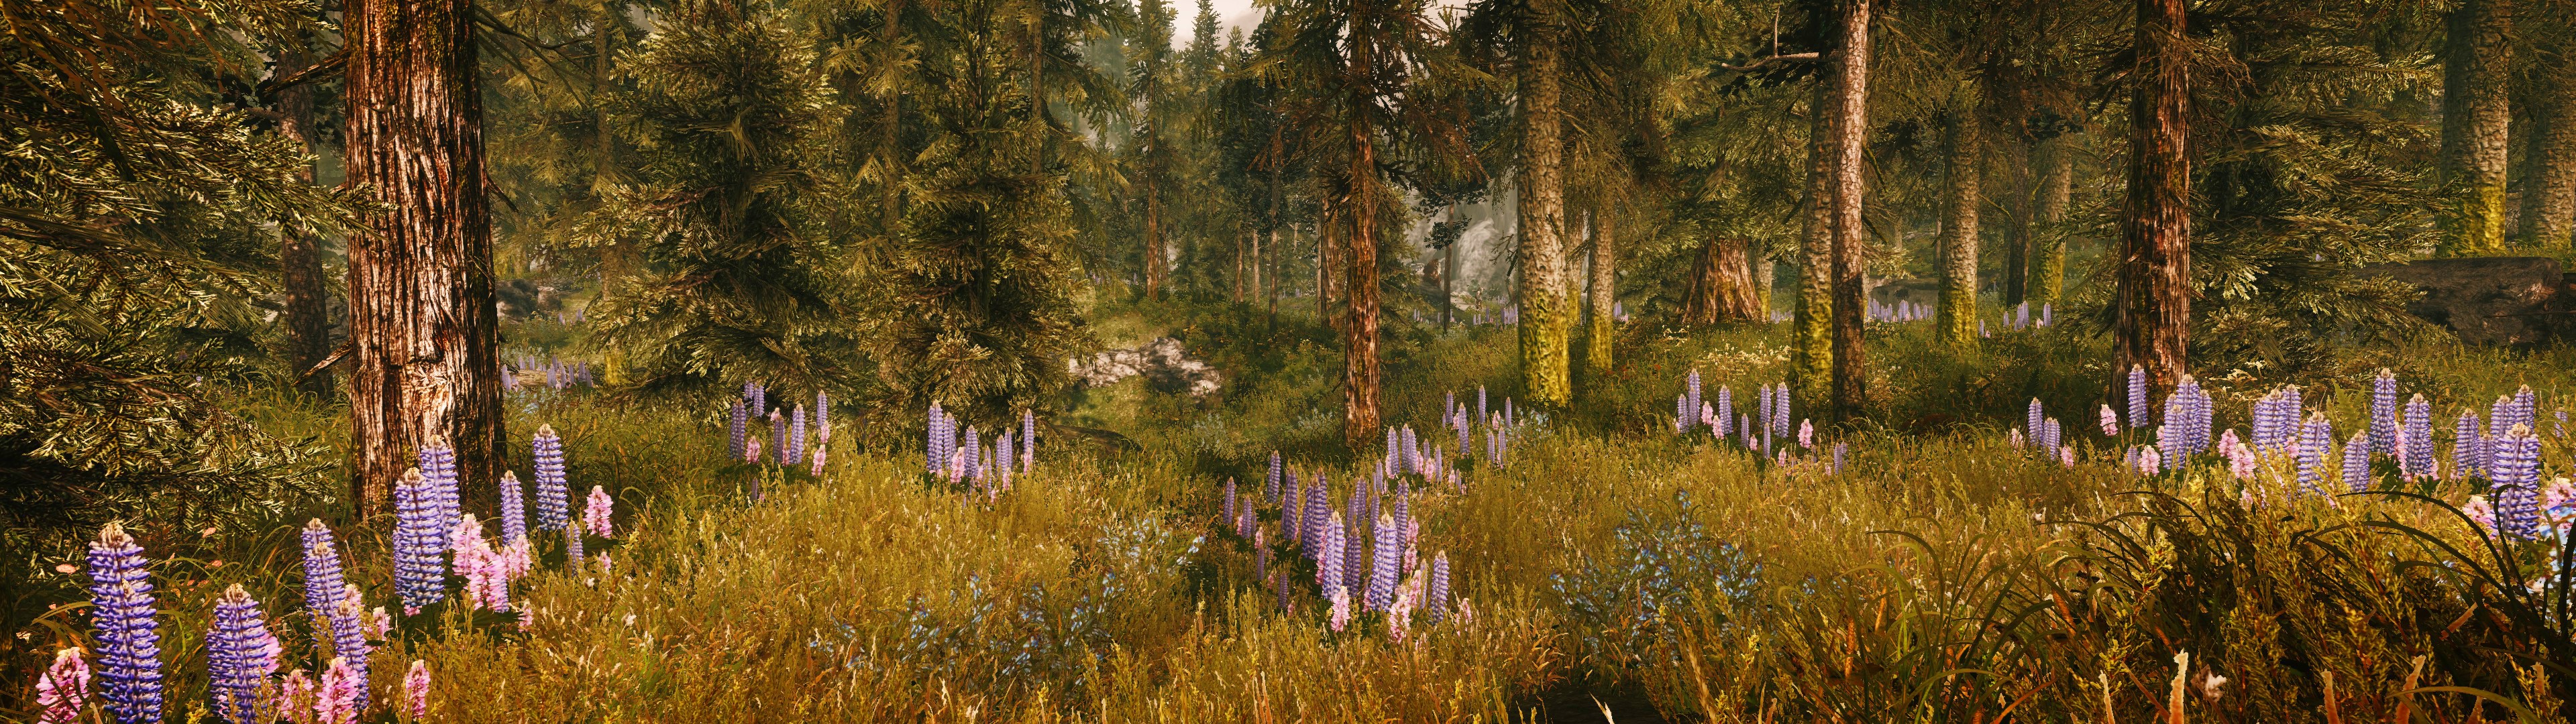 General 3840x1080 The Elder Scrolls V: Skyrim multiple display landscape grass RPG video games PC gaming screen shot